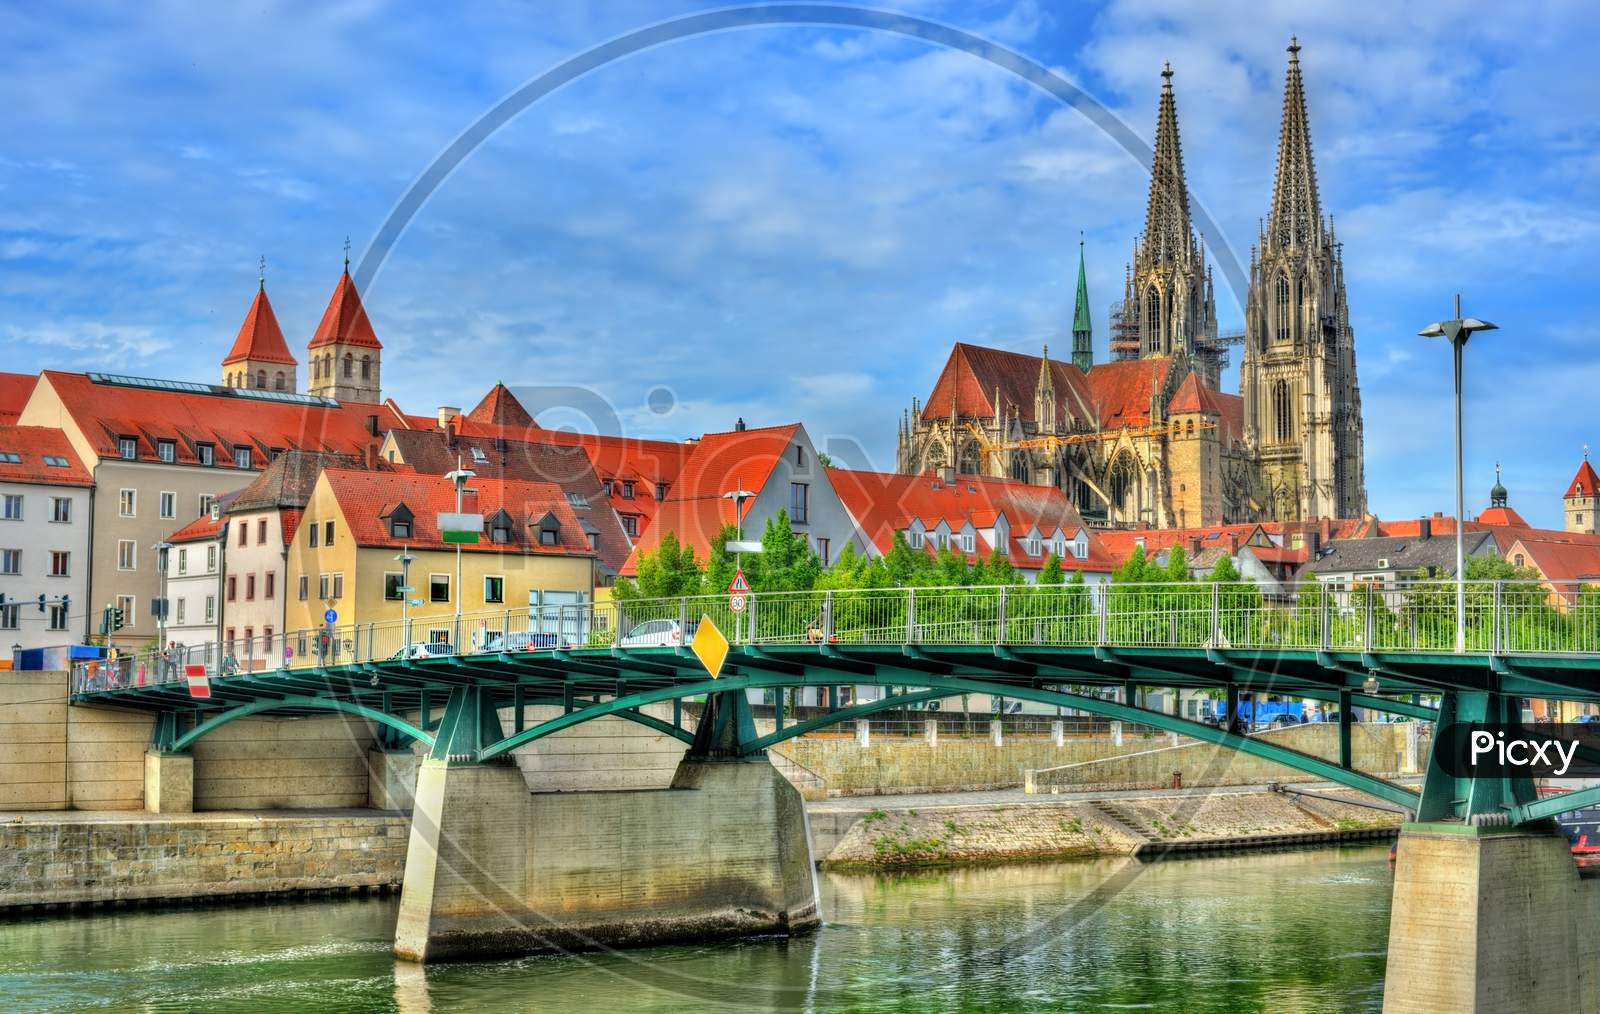 Eiserne Brucke, A Bridge Across Danube In Regensburg, Germany